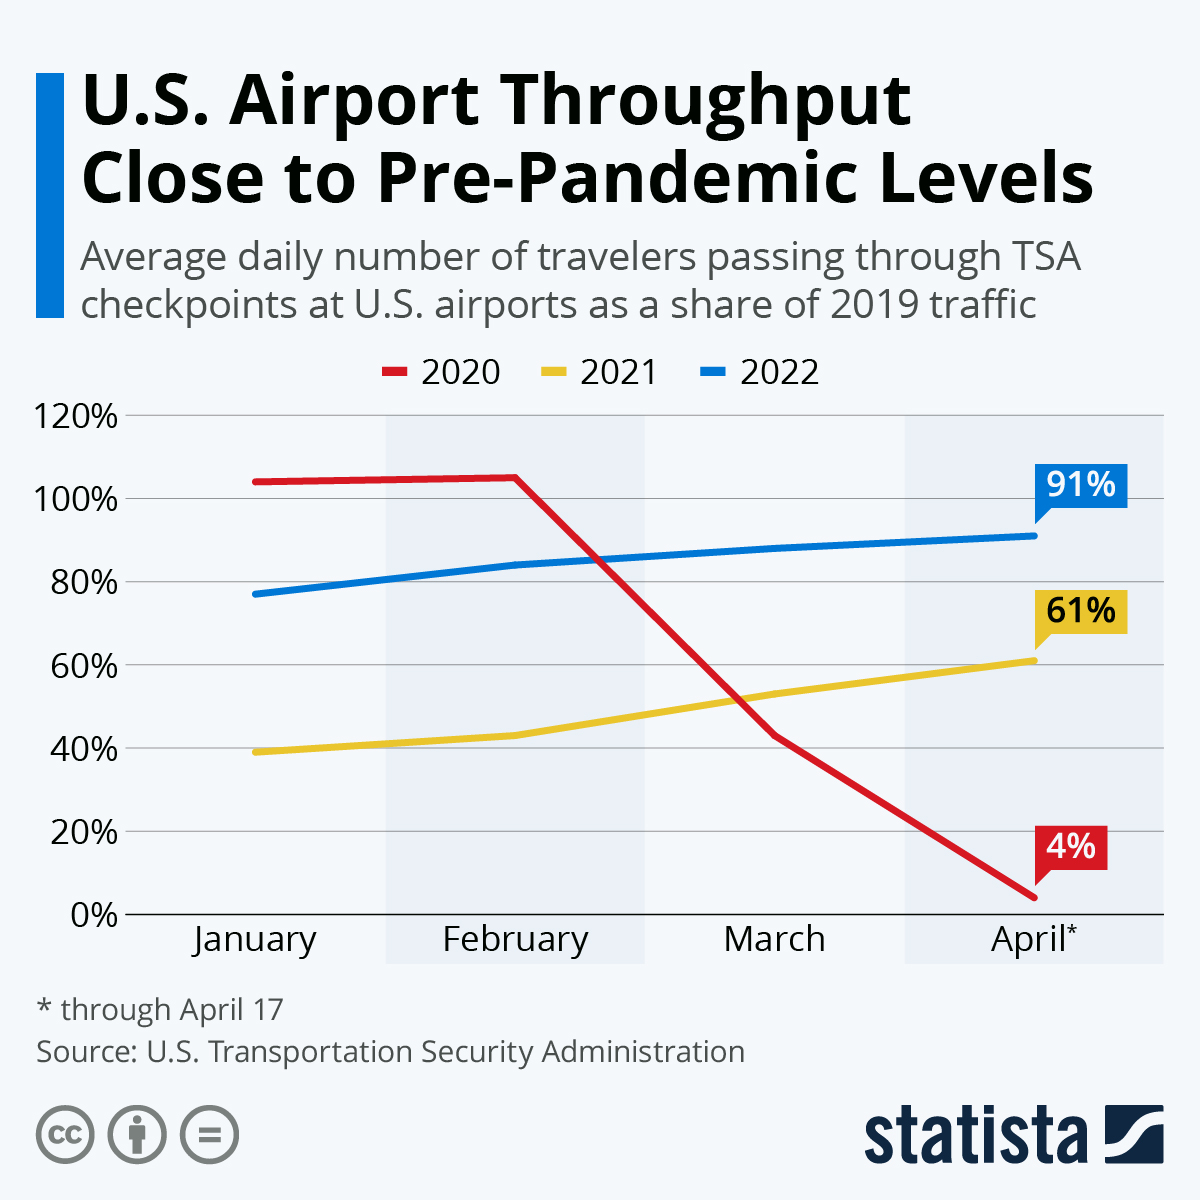 U.S. Airport Throughput Close to Pre-Pandemic Levels